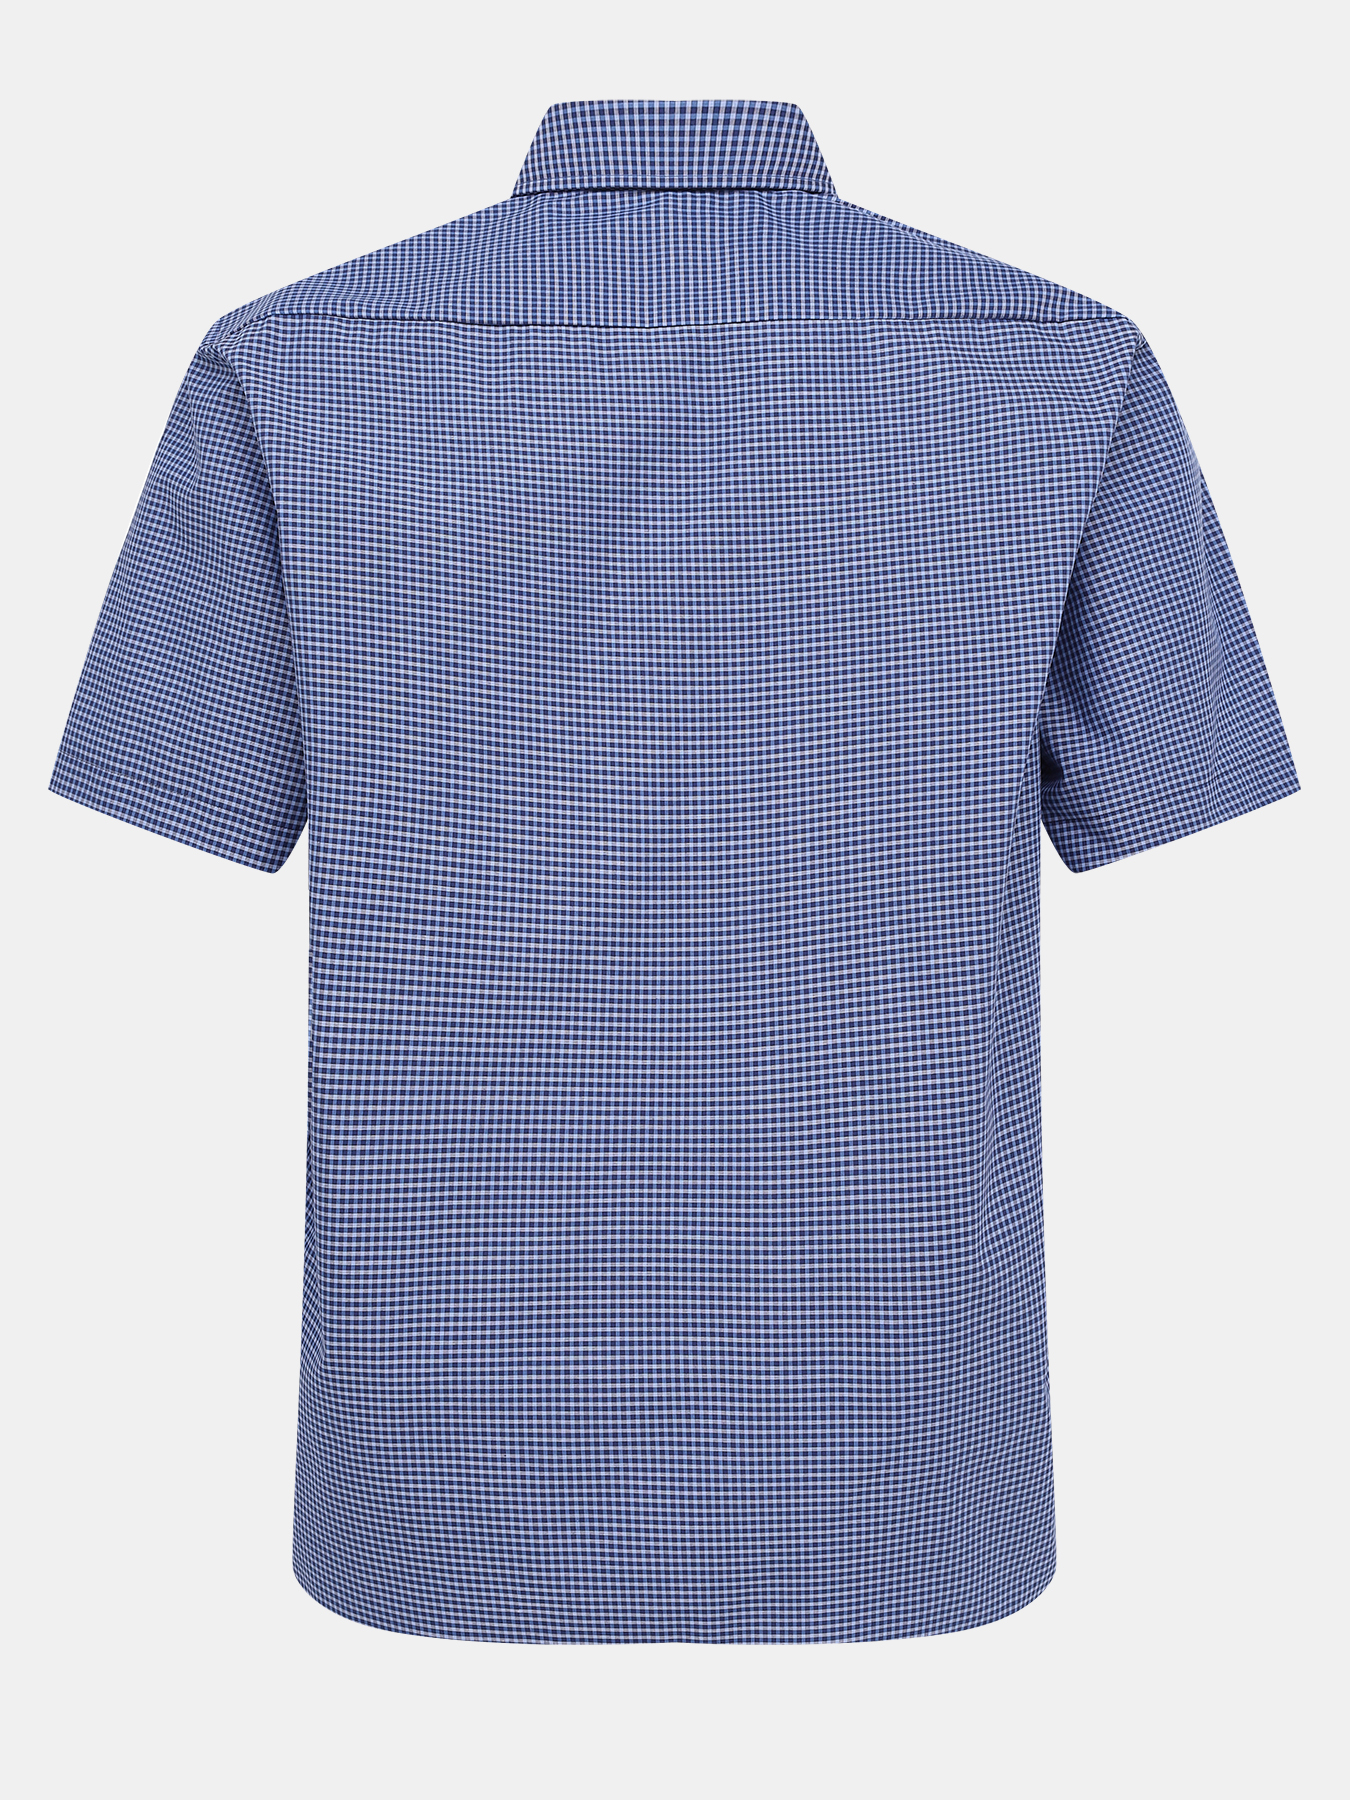 Рубашка Eterna 416186-052, цвет темно-синий, размер 60 - фото 2